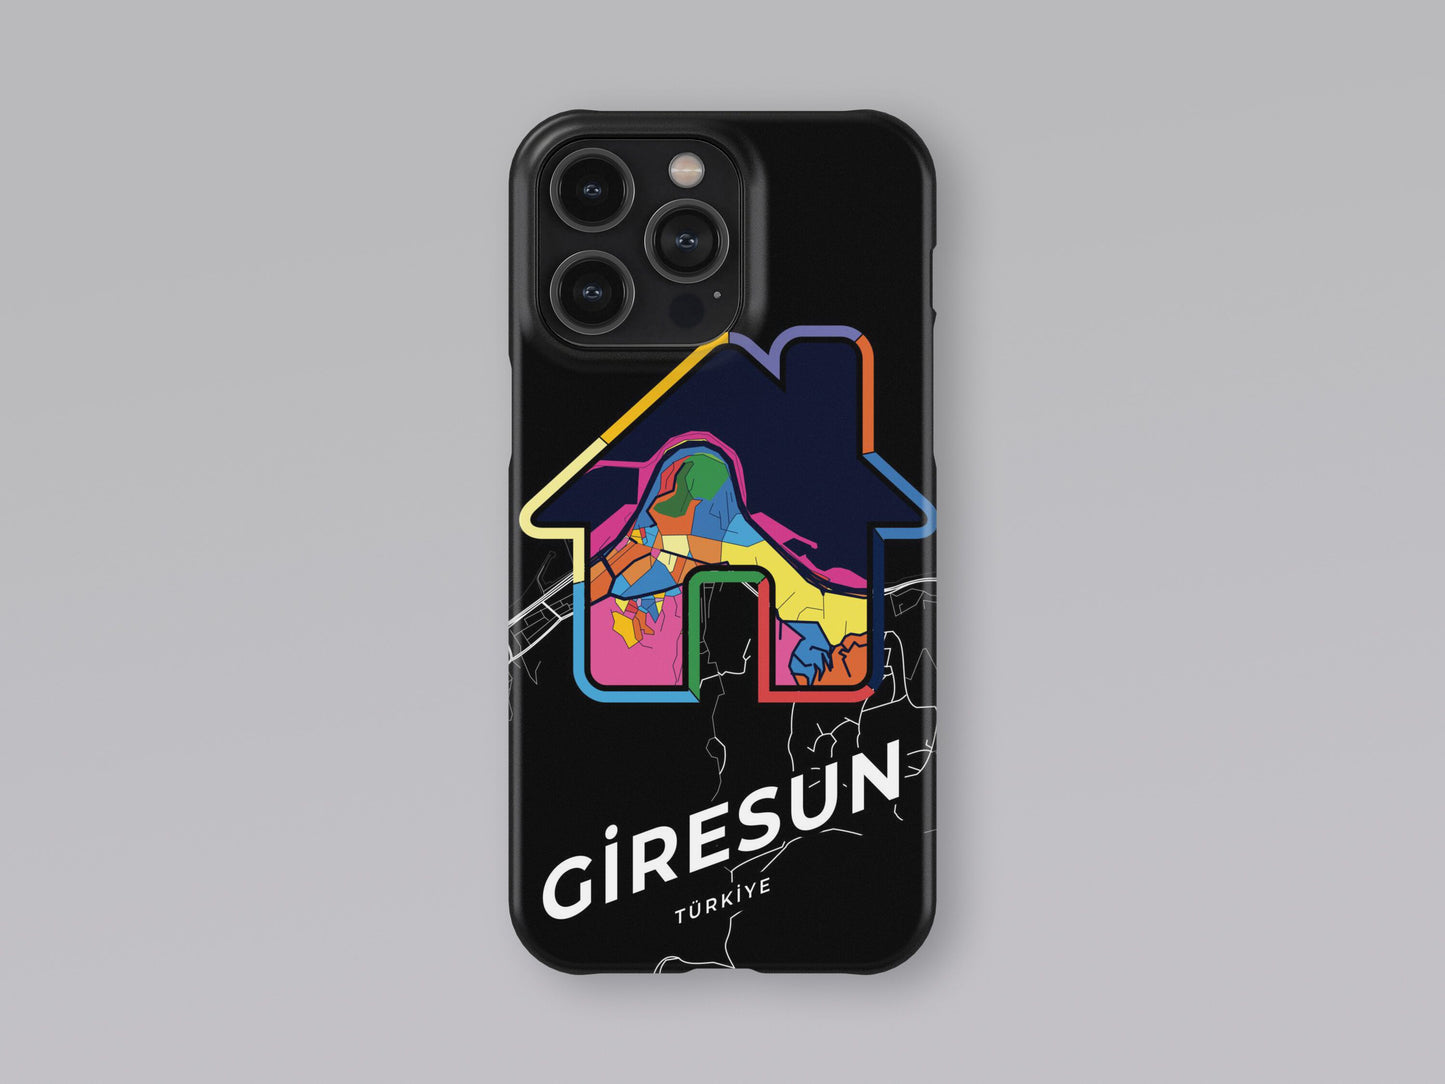 Giresun Turkey slim phone case with colorful icon. Birthday, wedding or housewarming gift. Couple match cases. 3